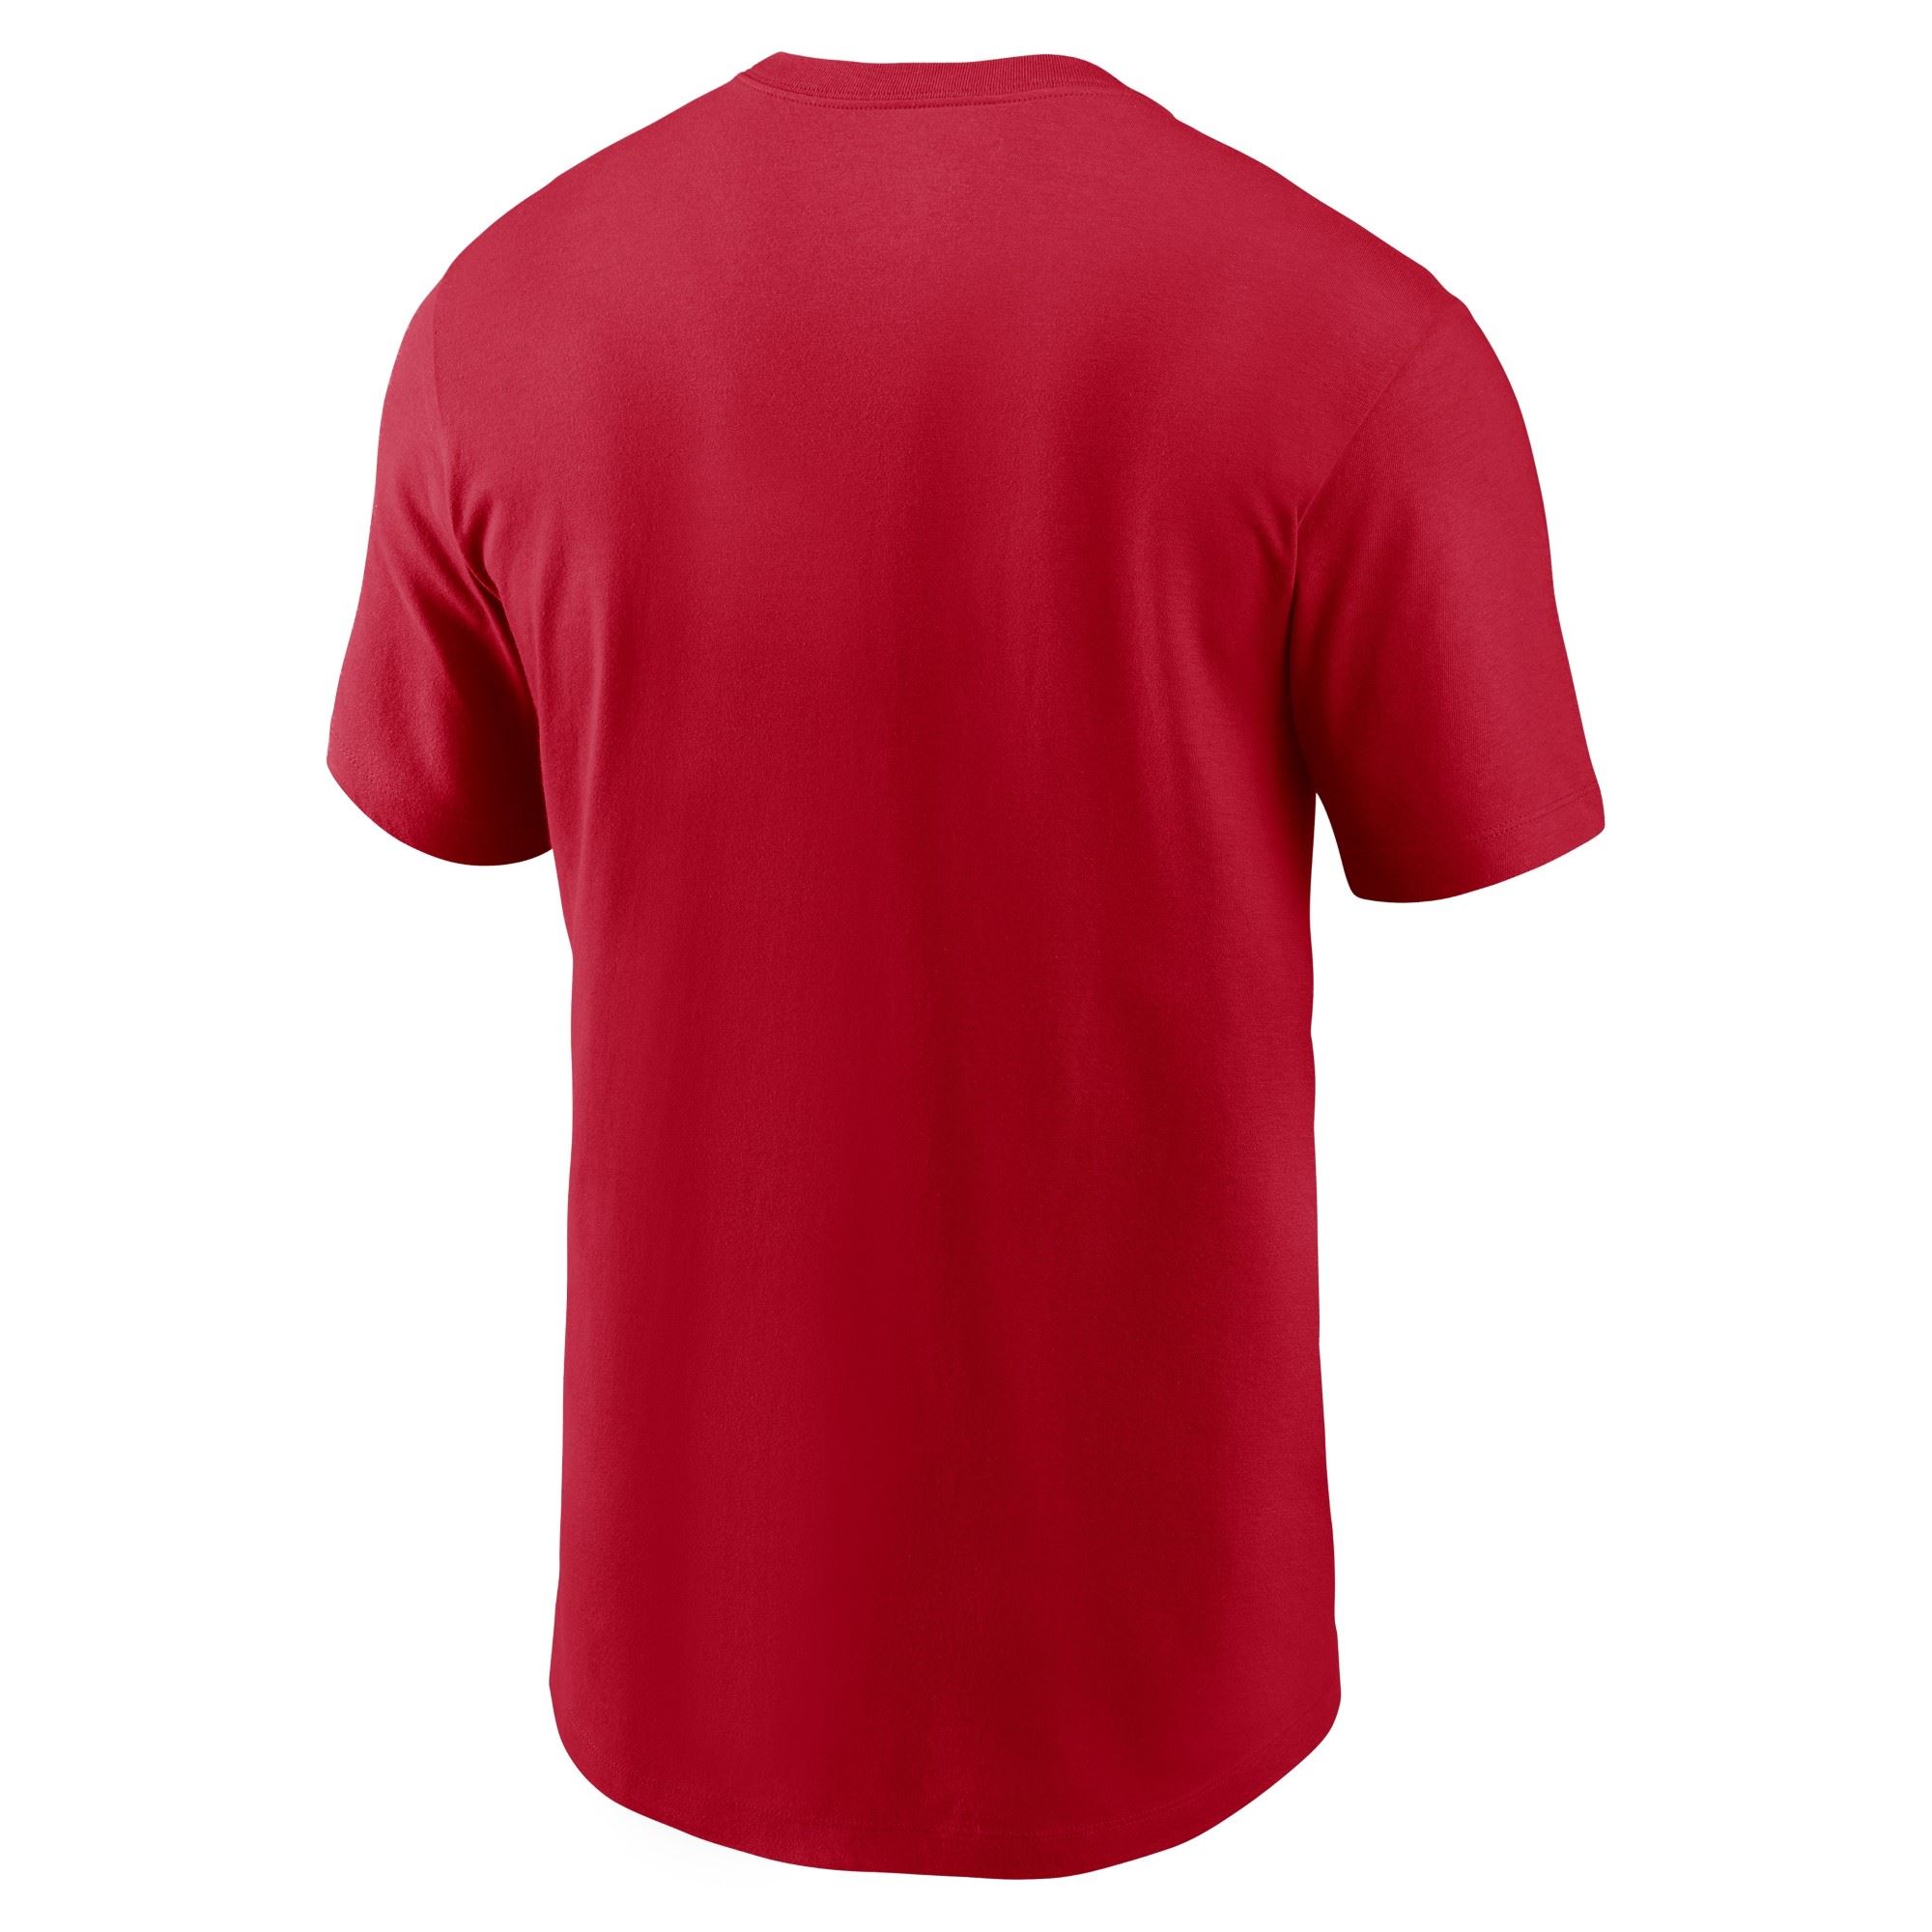 Kansas City Chiefs Red NFL Local Essential Cotton T-Shirt Nike 